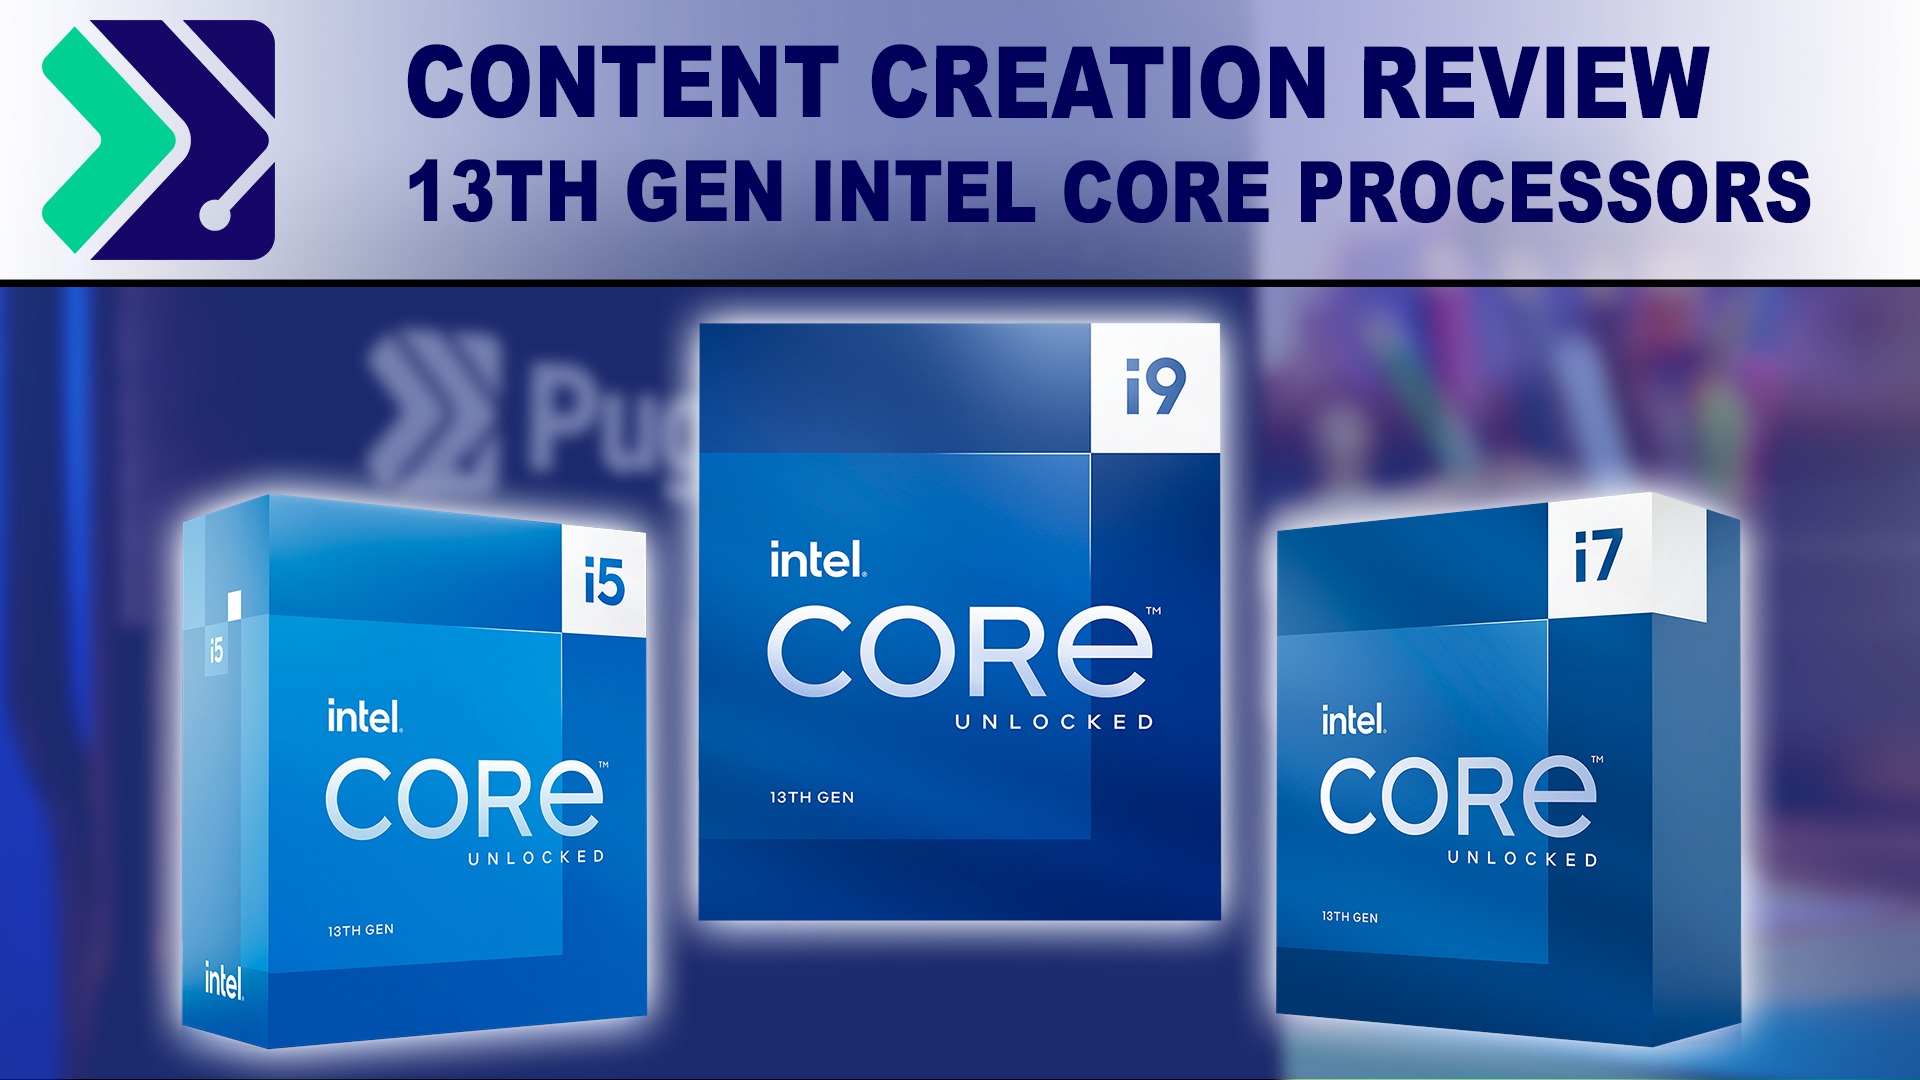 erger maken redden voorkant 13th Gen Intel Core Processors Content Creation Review | Puget Systems